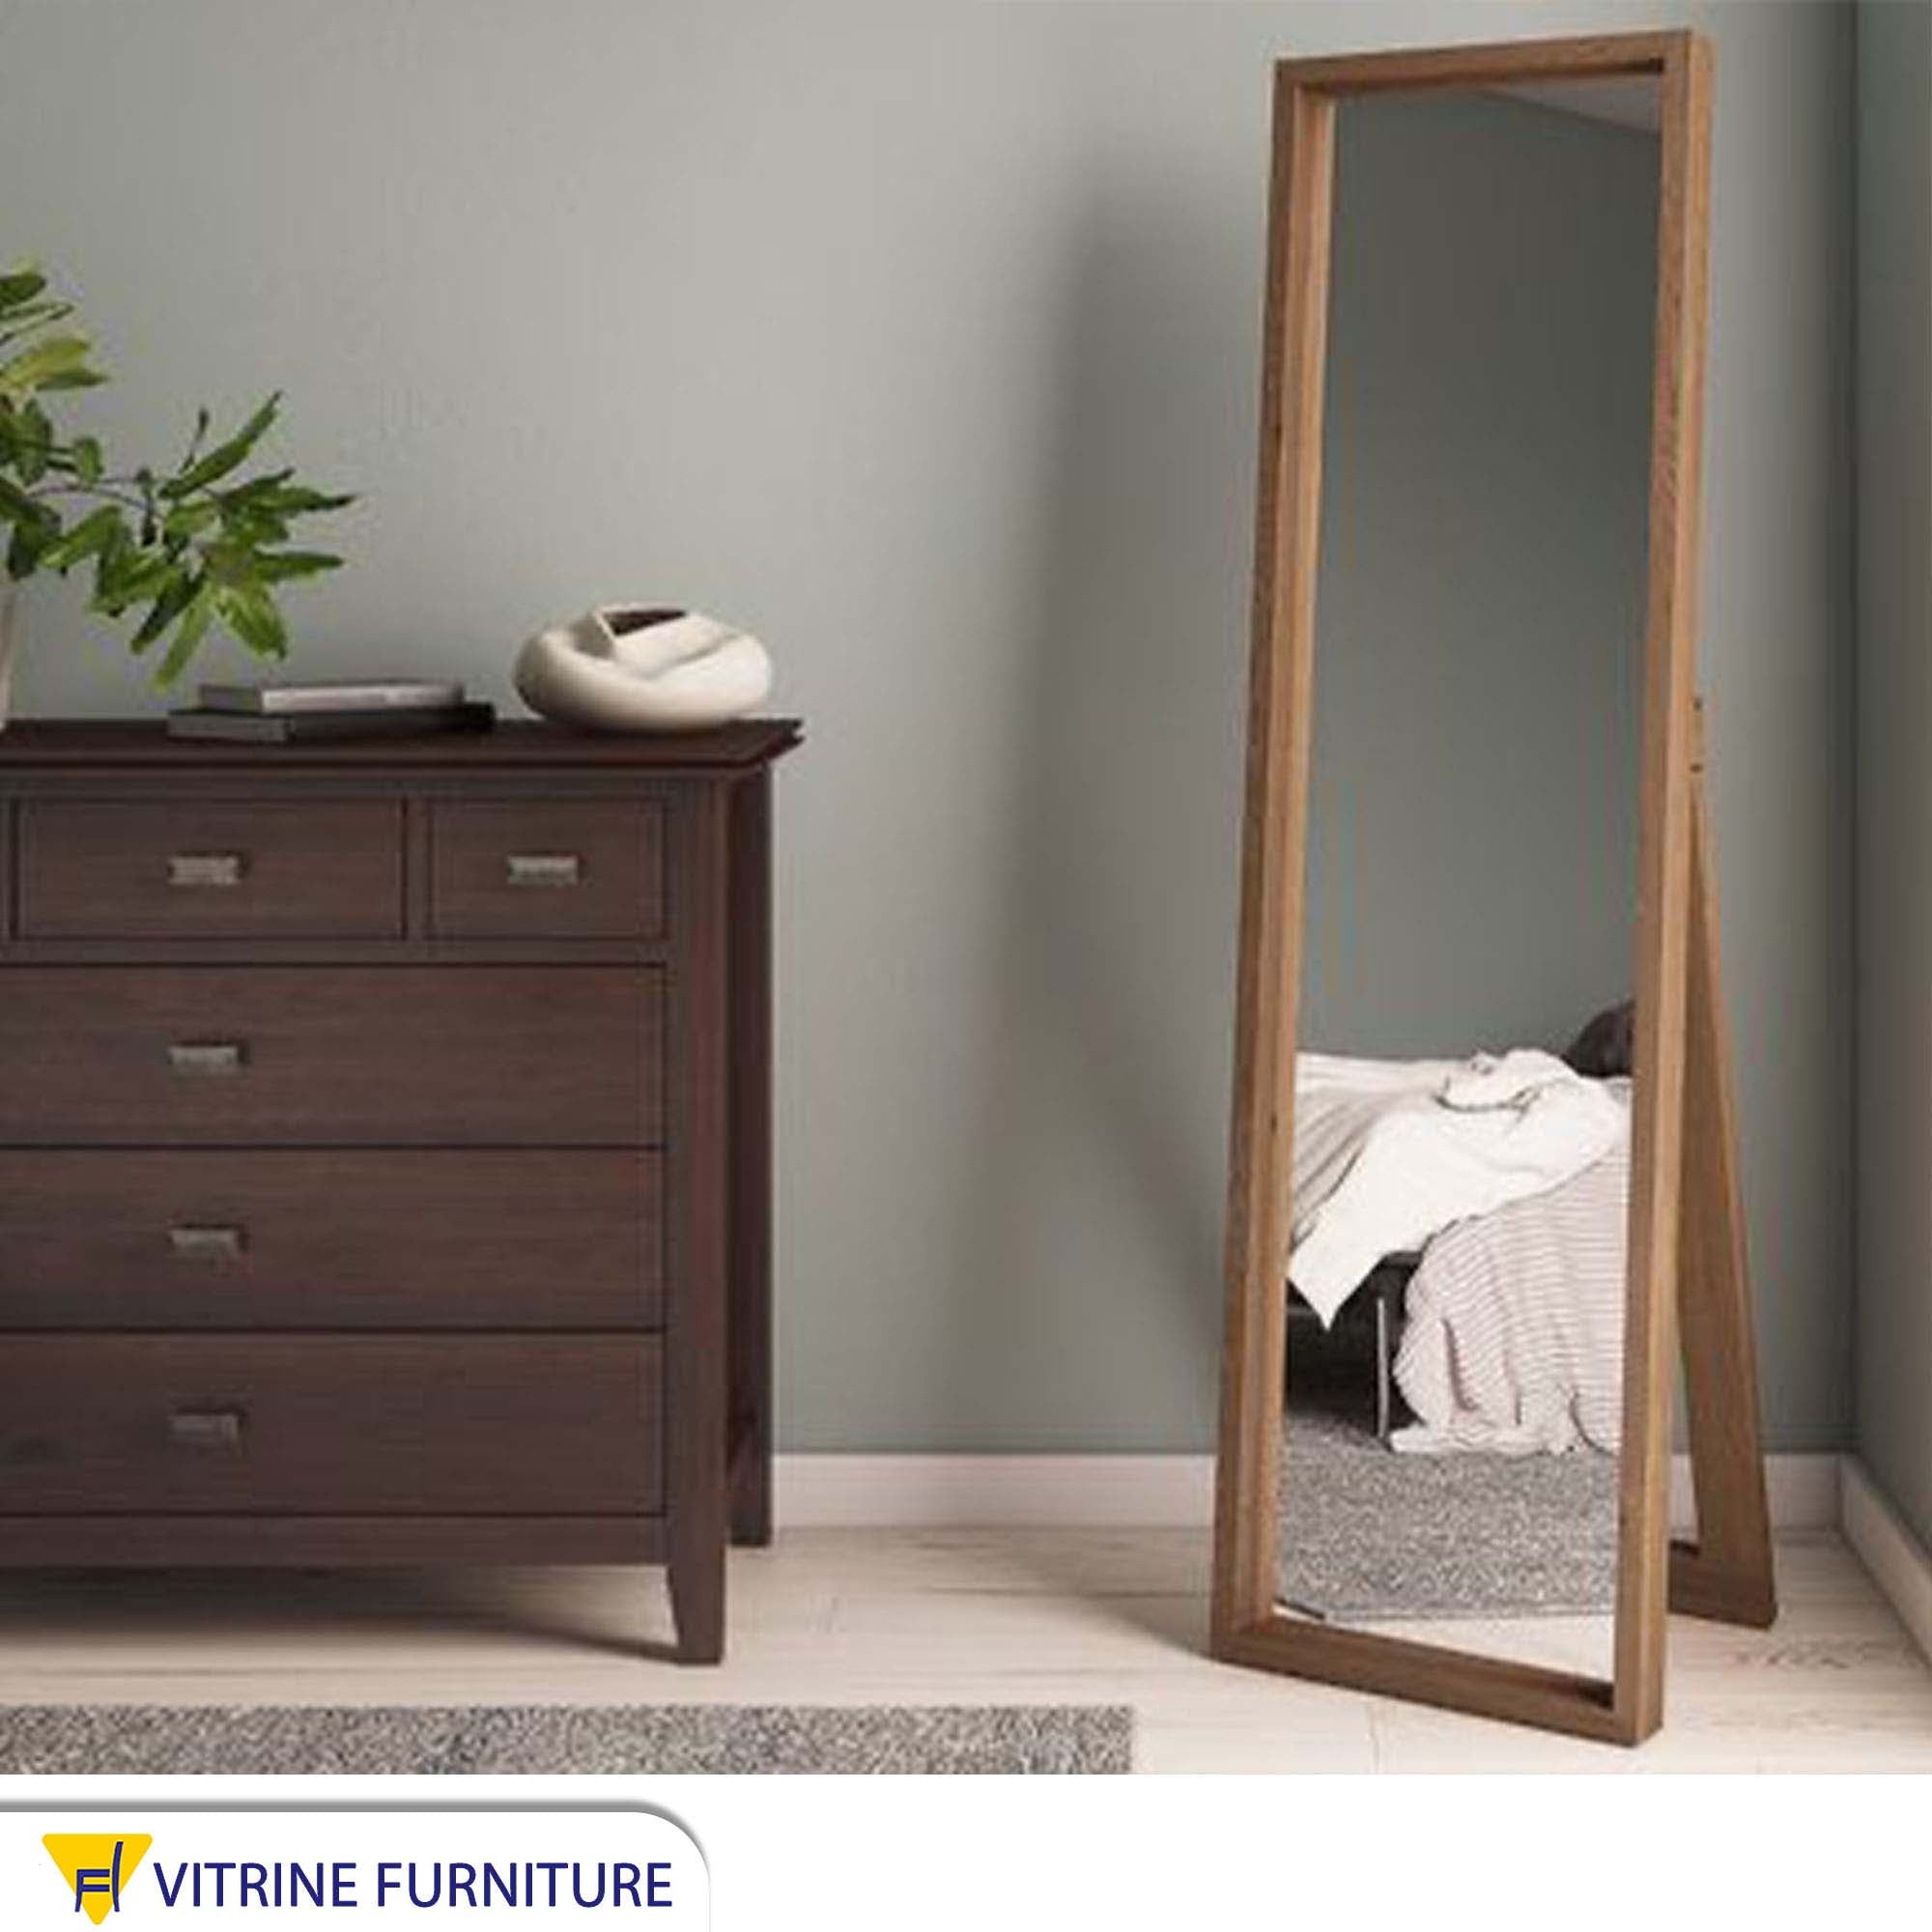 Modern rectangular mirror with wooden frame